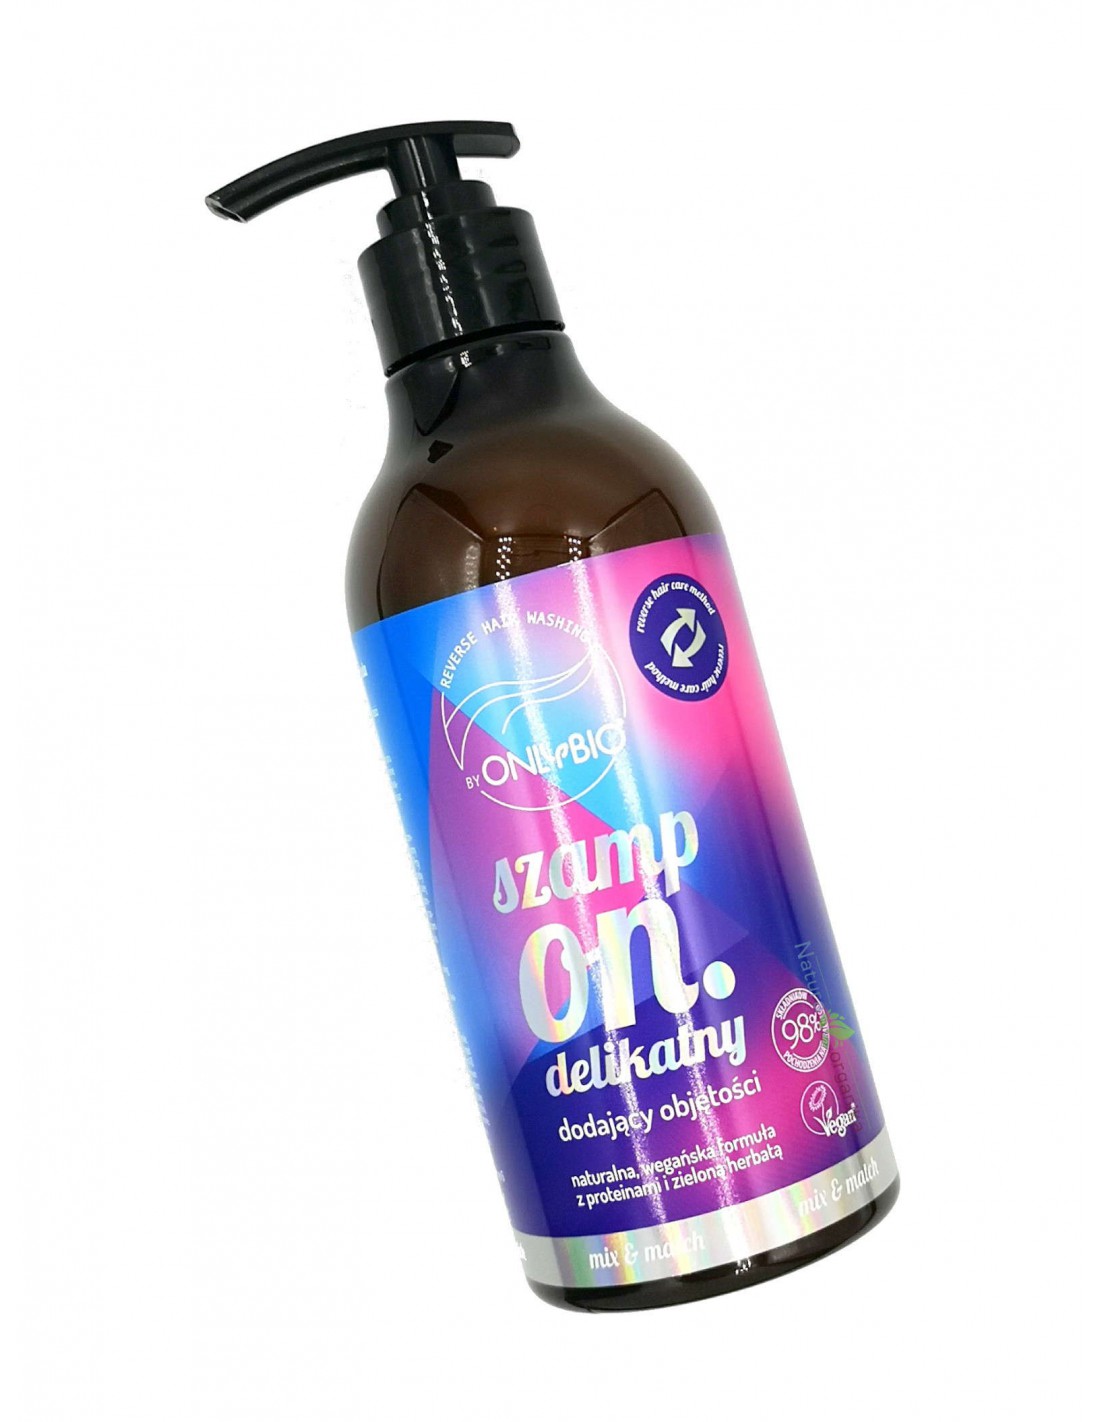 szampon onlybio